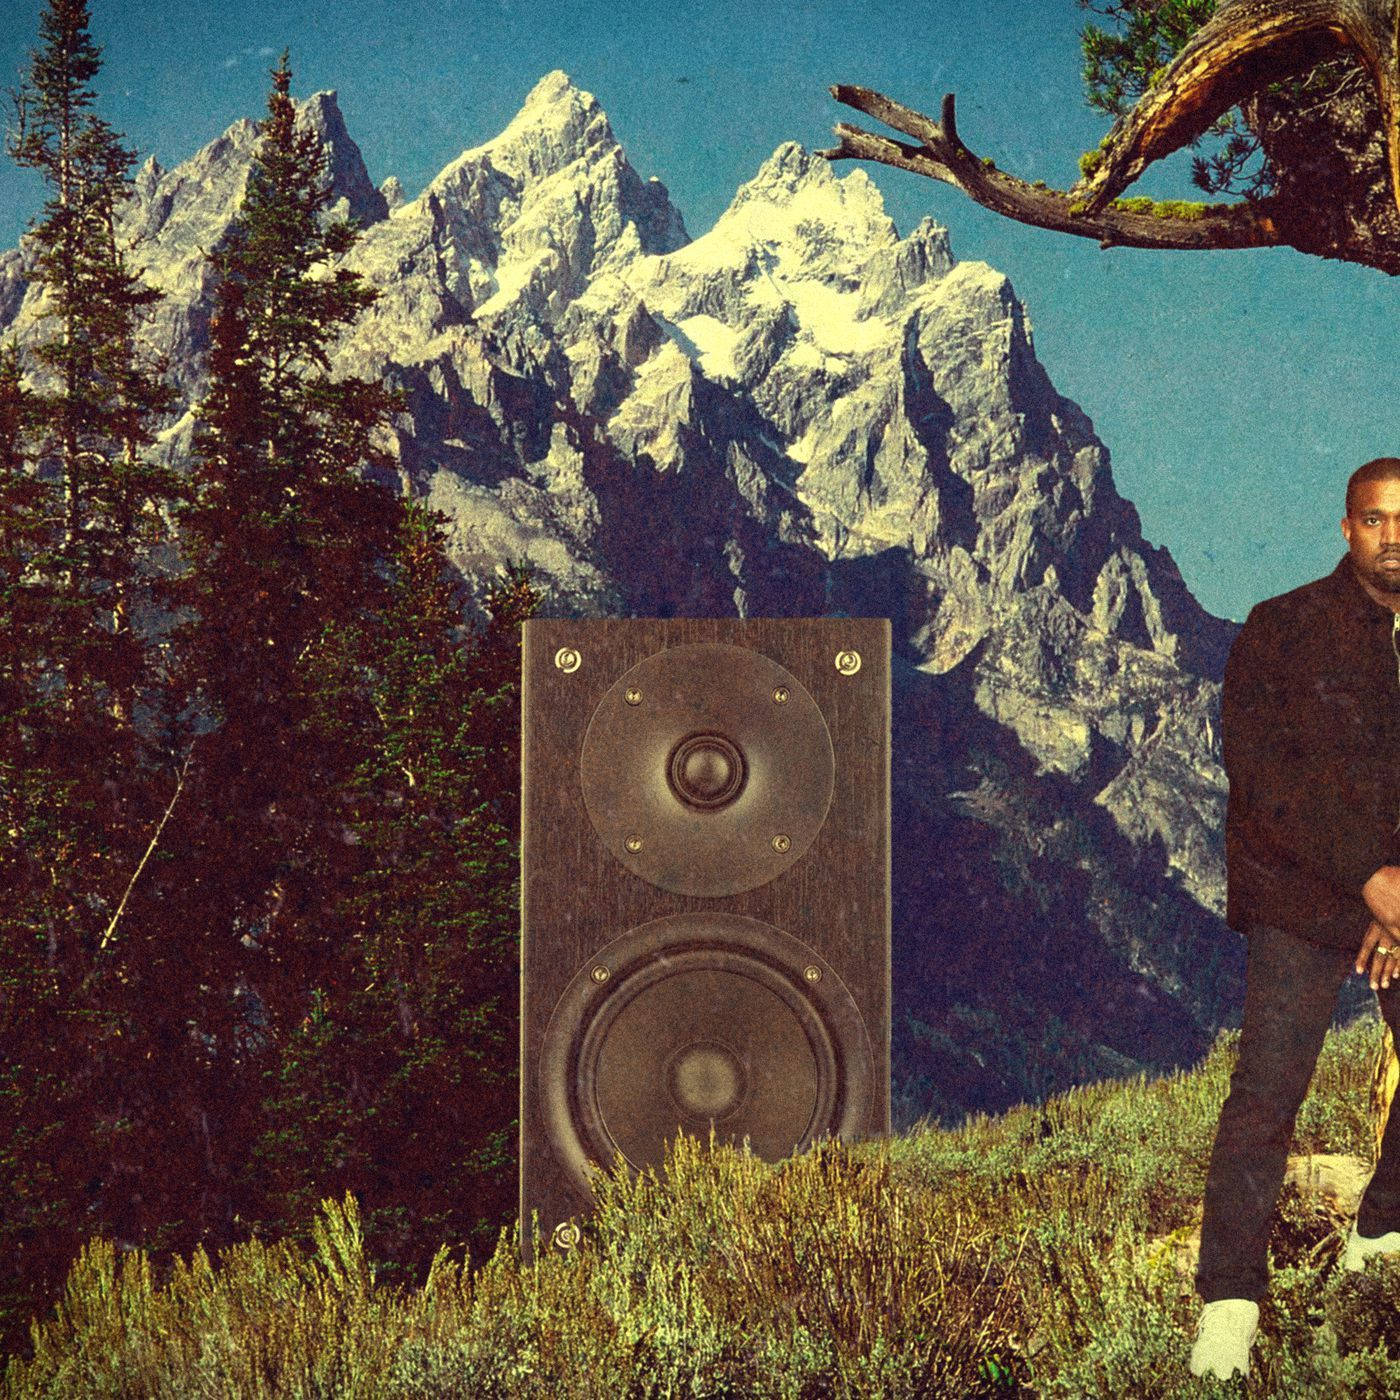 Kanyewest Udgiver Sit 8. Soloalbum Ye. Wallpaper